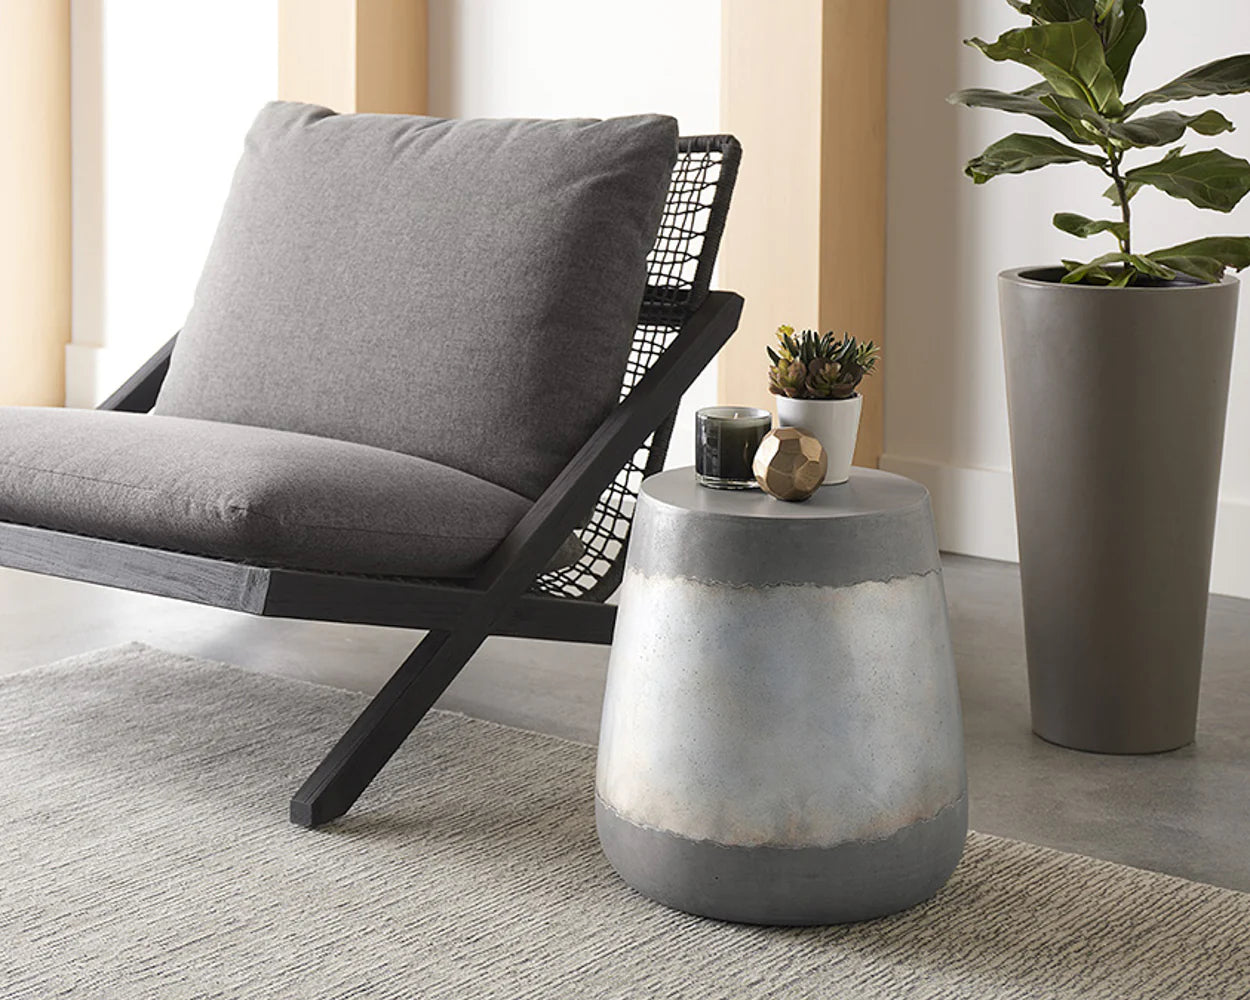 Bari Lounge Chair - Gracebay Grey - Charcoal (Patio/Outdoor)